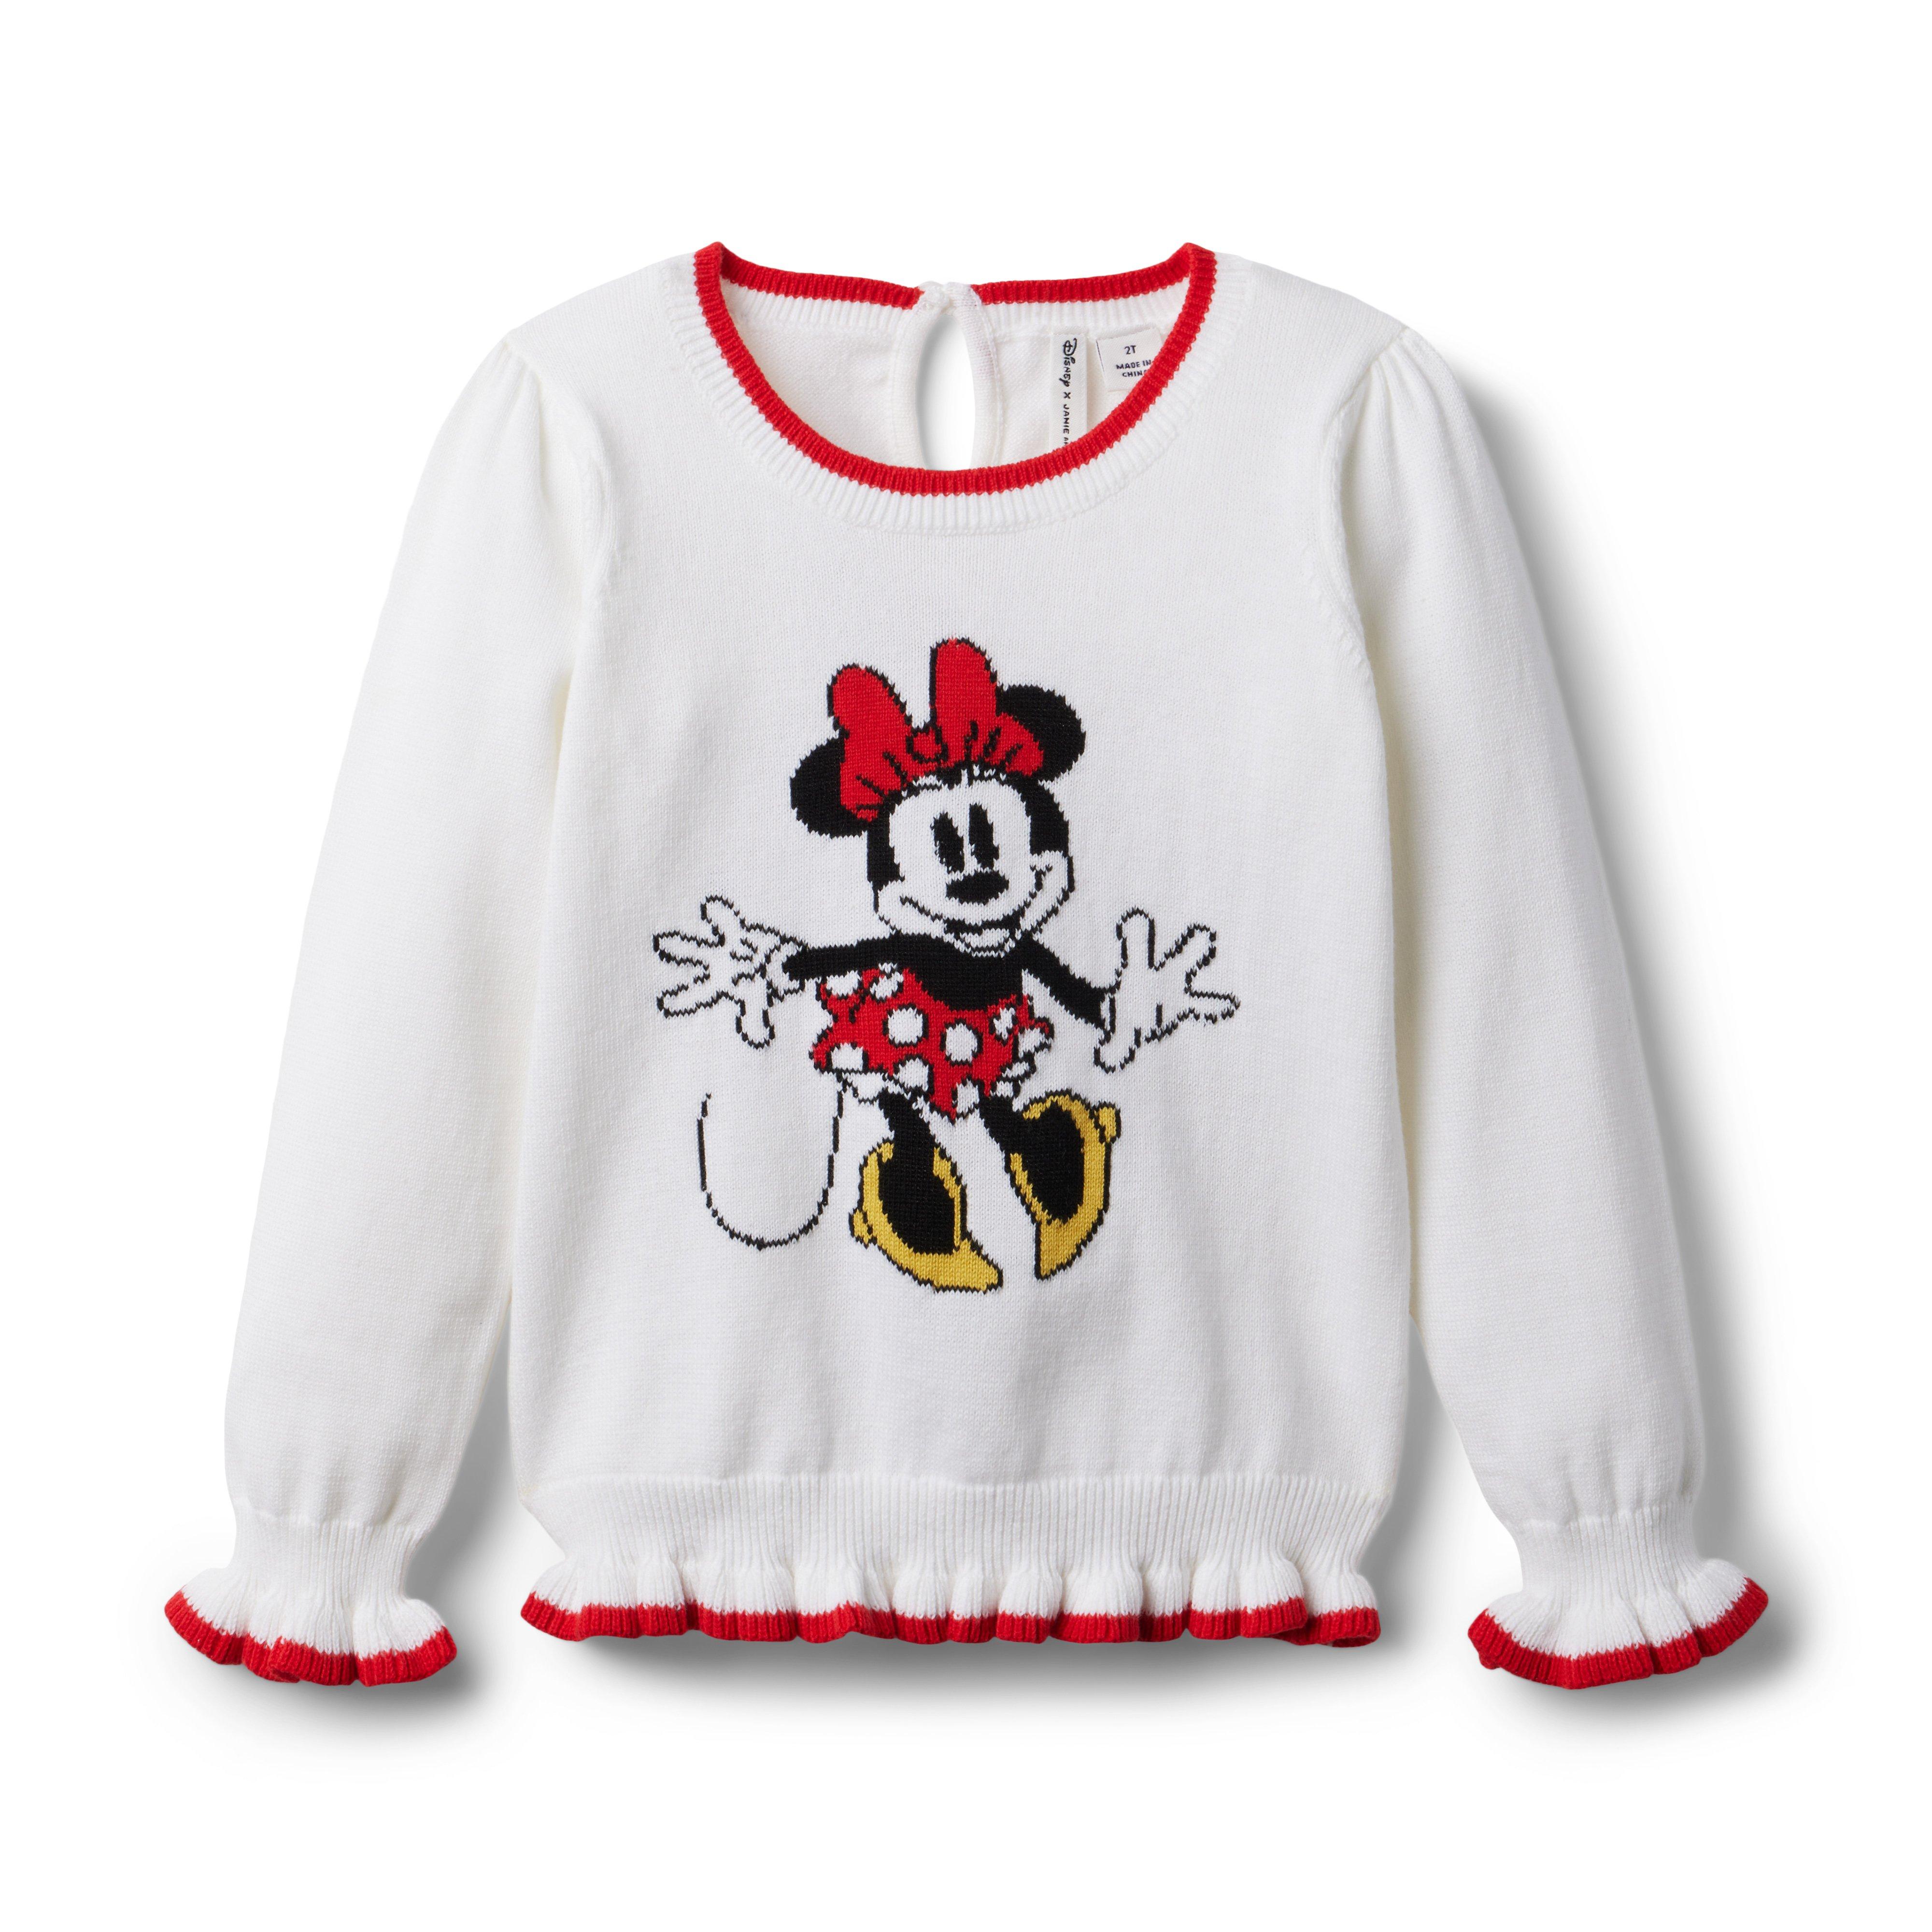 Disney Minnie Mouse Sweater